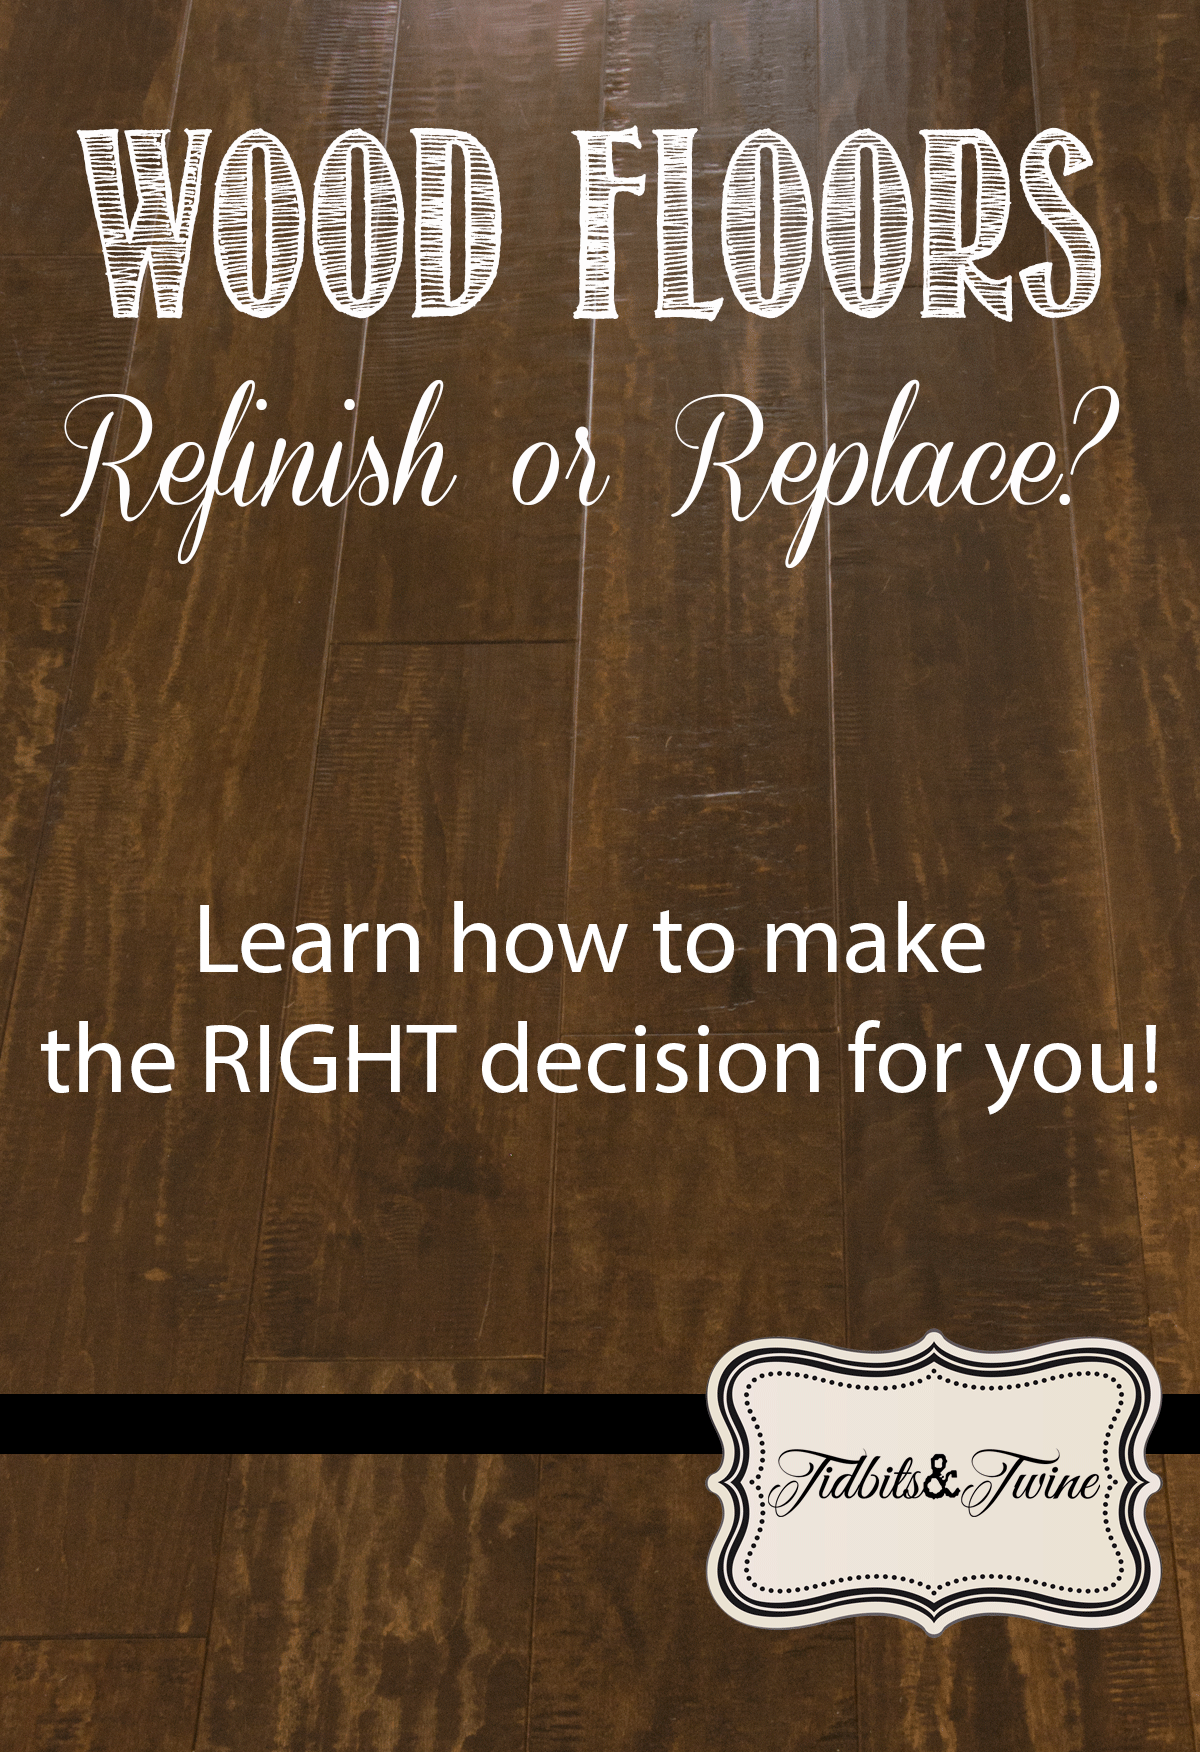 Hardwood Floors Refinish Or Replace, Refinish Or Replace Hardwood Floors